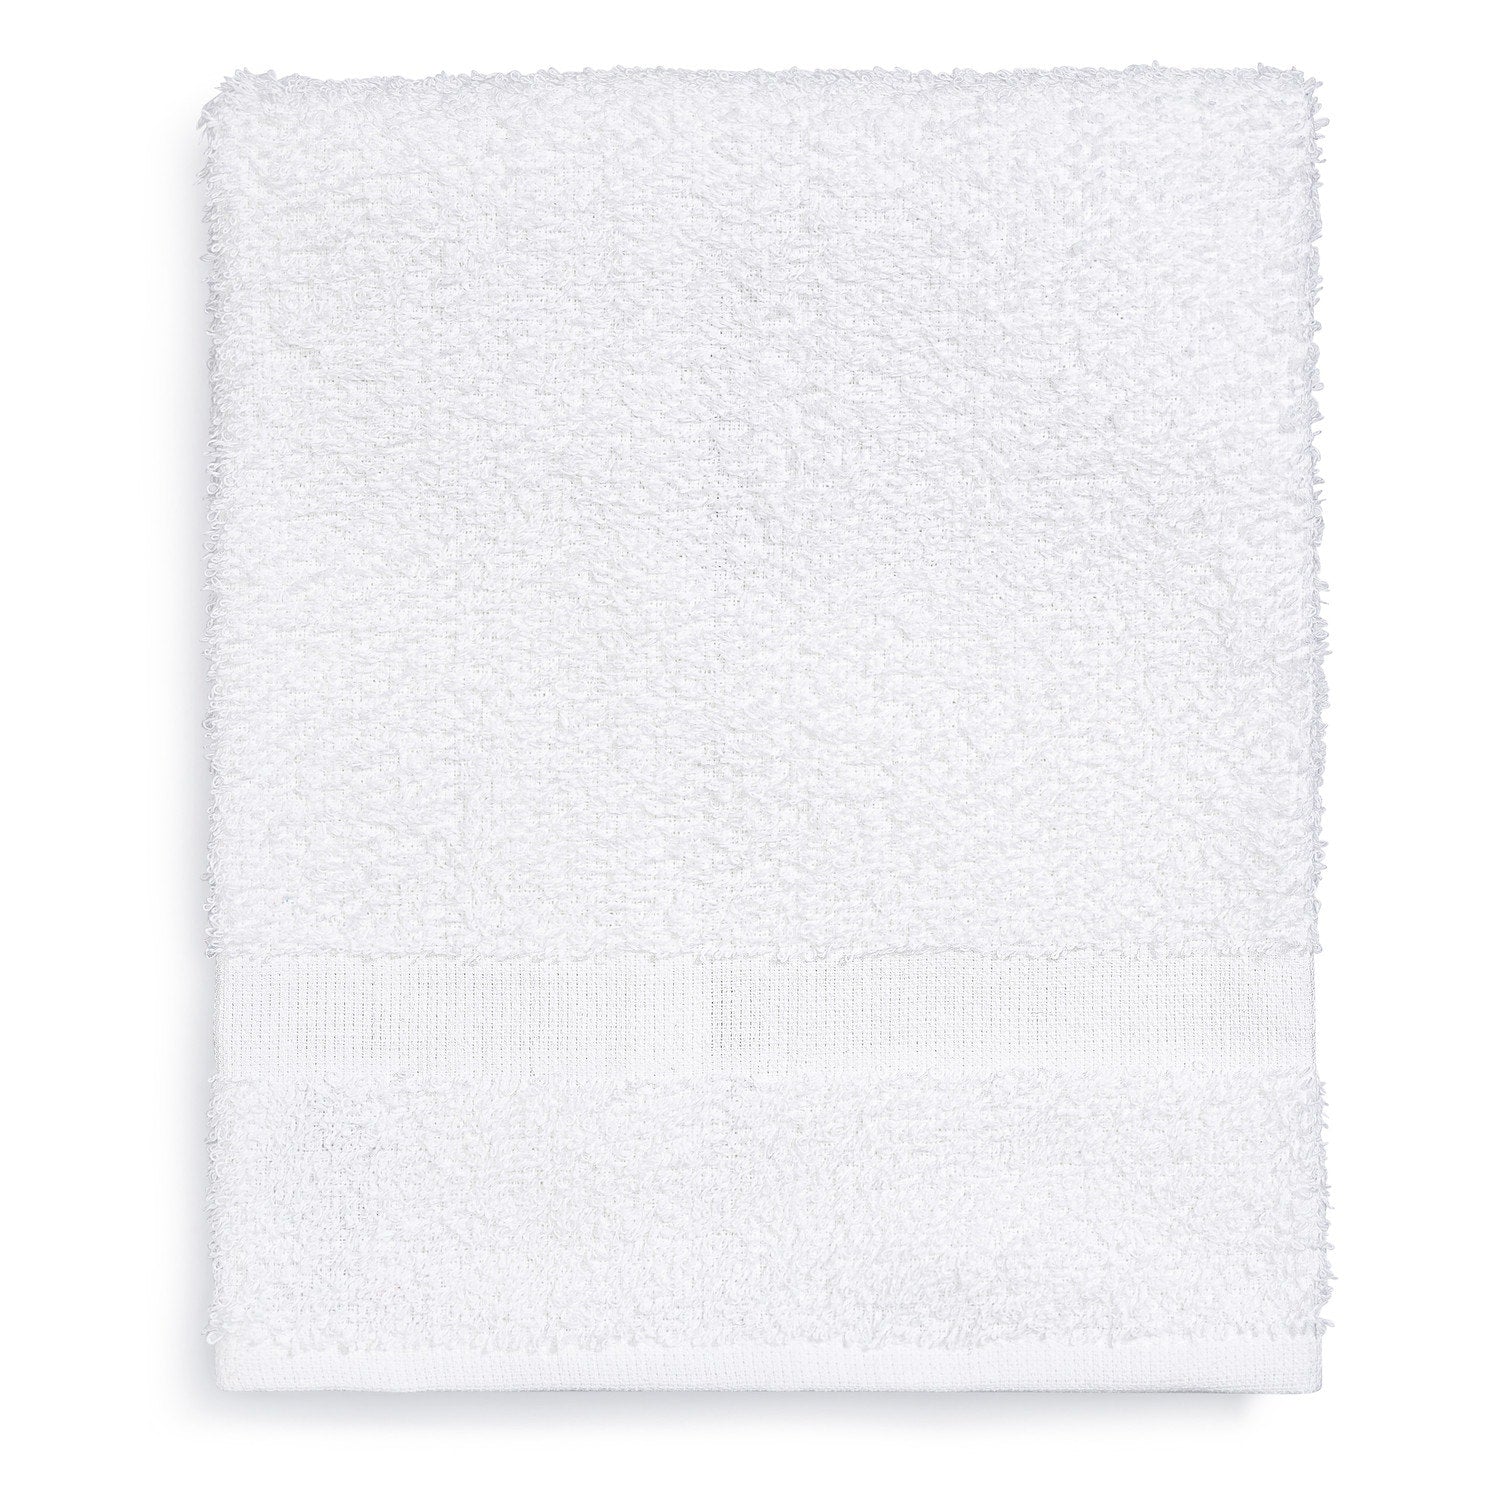 16X27 White Hand Towel 3 lbs. per dozen